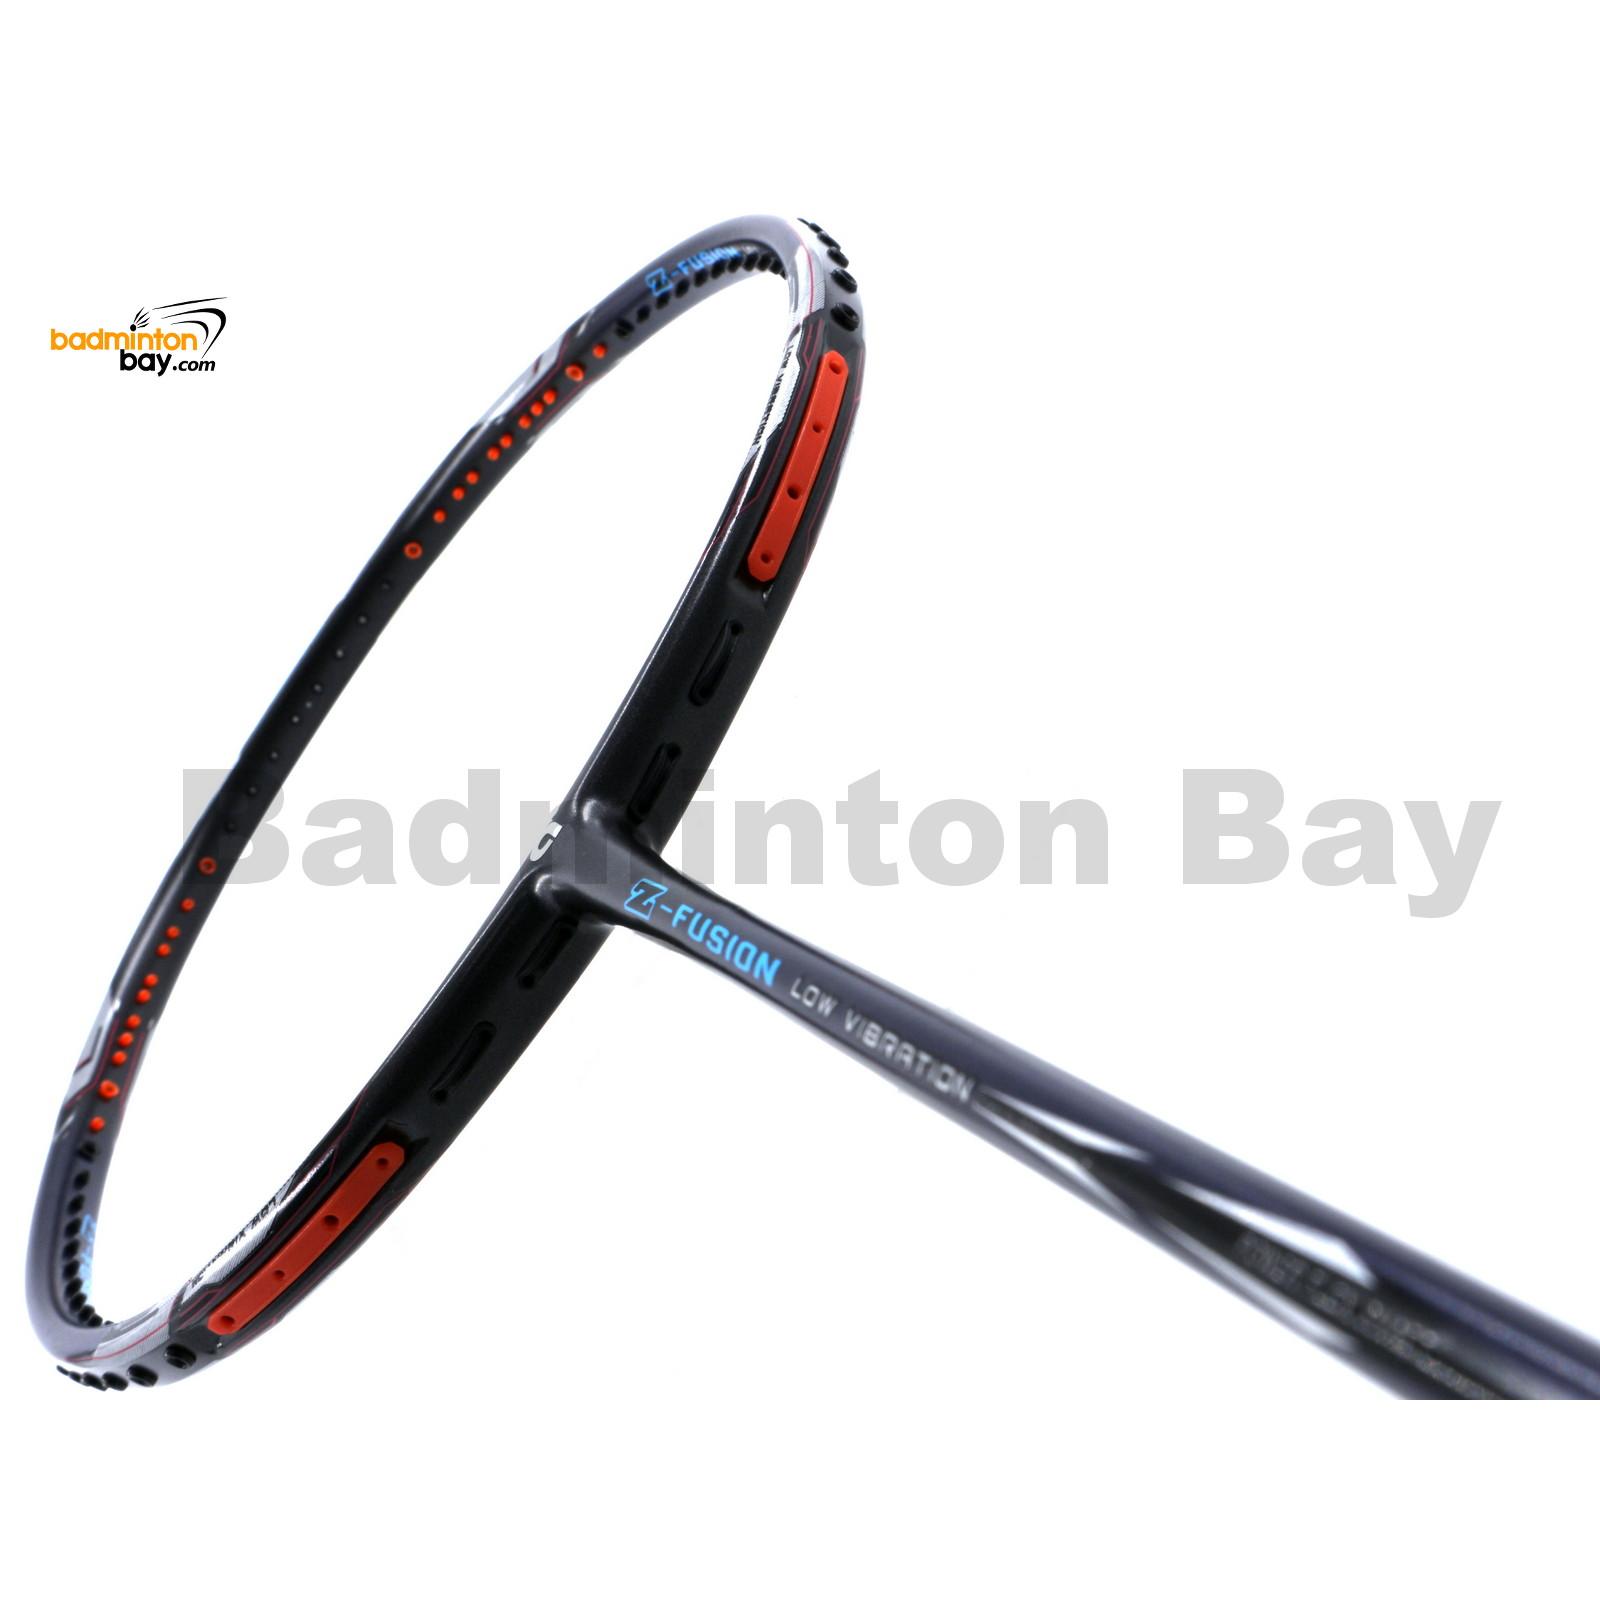 Apacs Z Fusion Dark Grey Badminton Racket Compact Frame (5U)